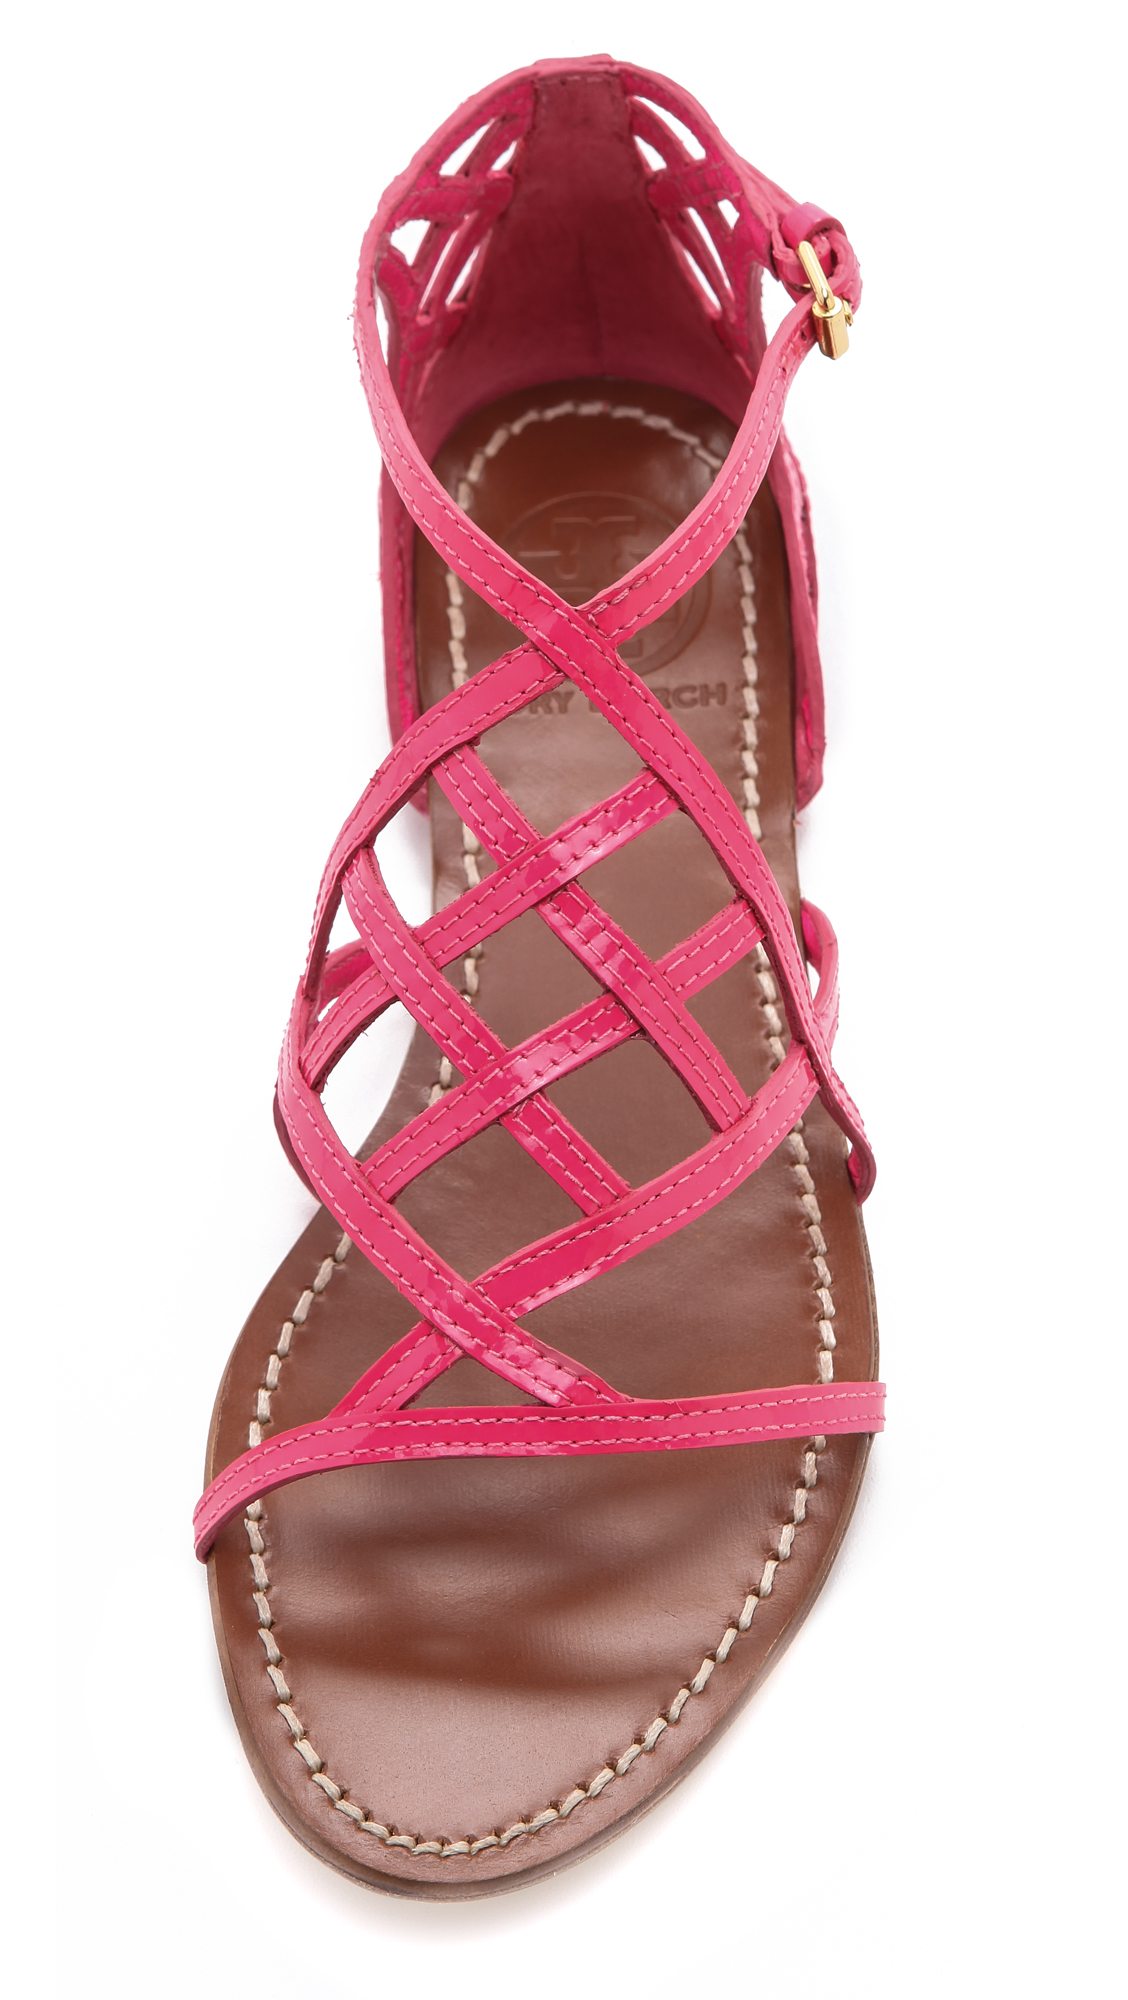 Tory Burch Amalie Flat Sandals in Pink - Lyst